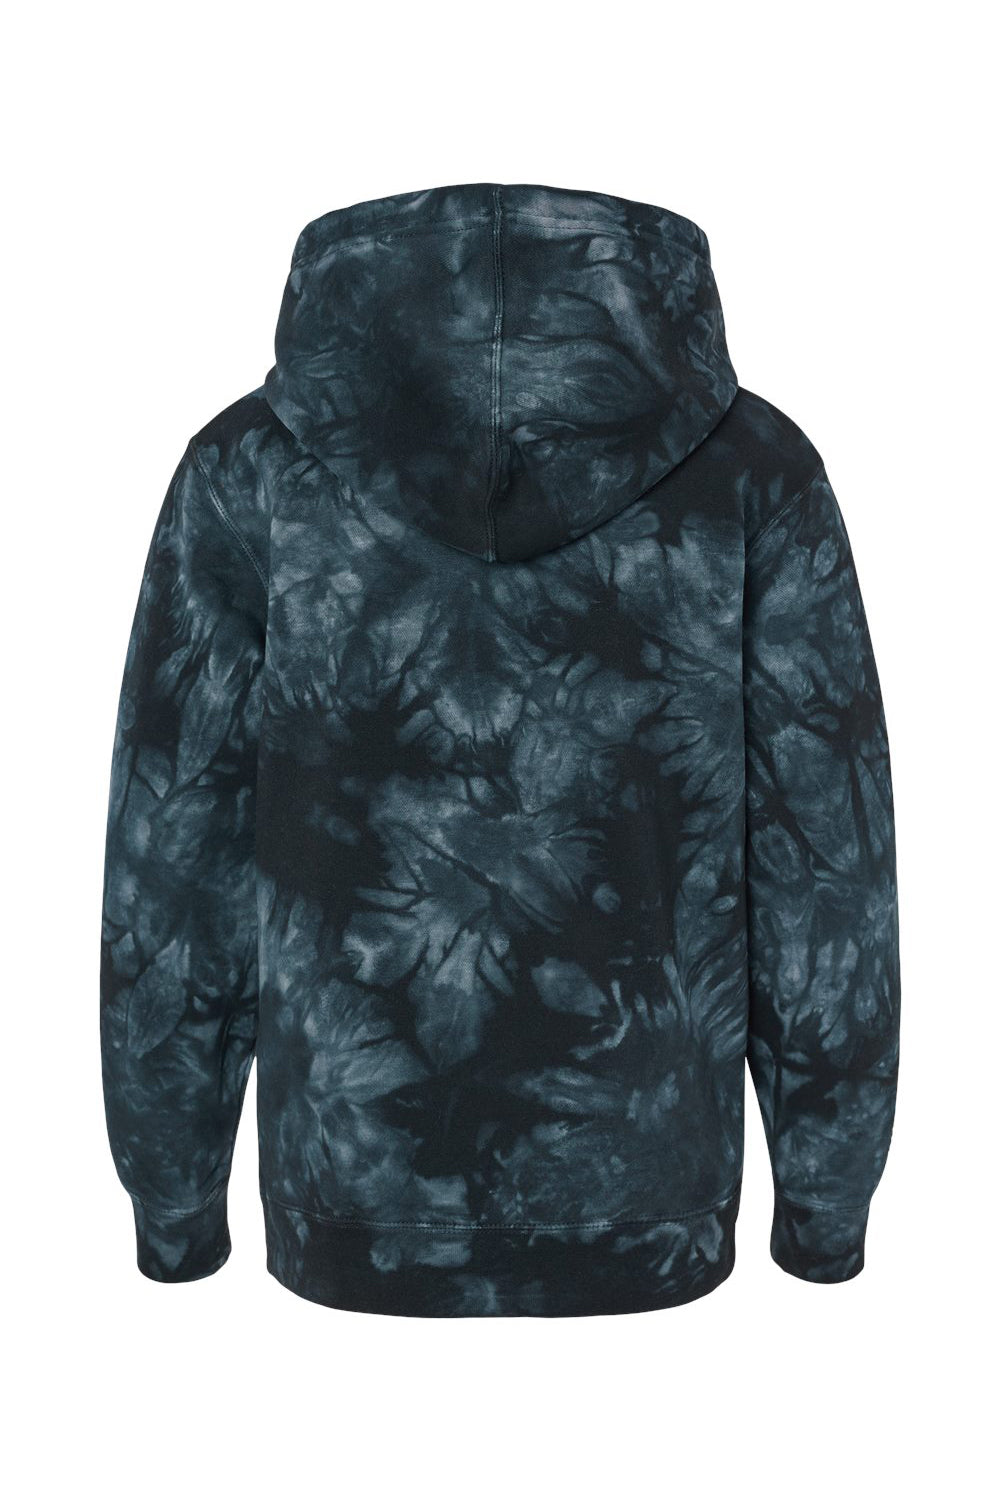 Independent Trading Co. PRM1500TD Youth Tie-Dye Hooded Sweatshirt Hoodie Black Flat Back